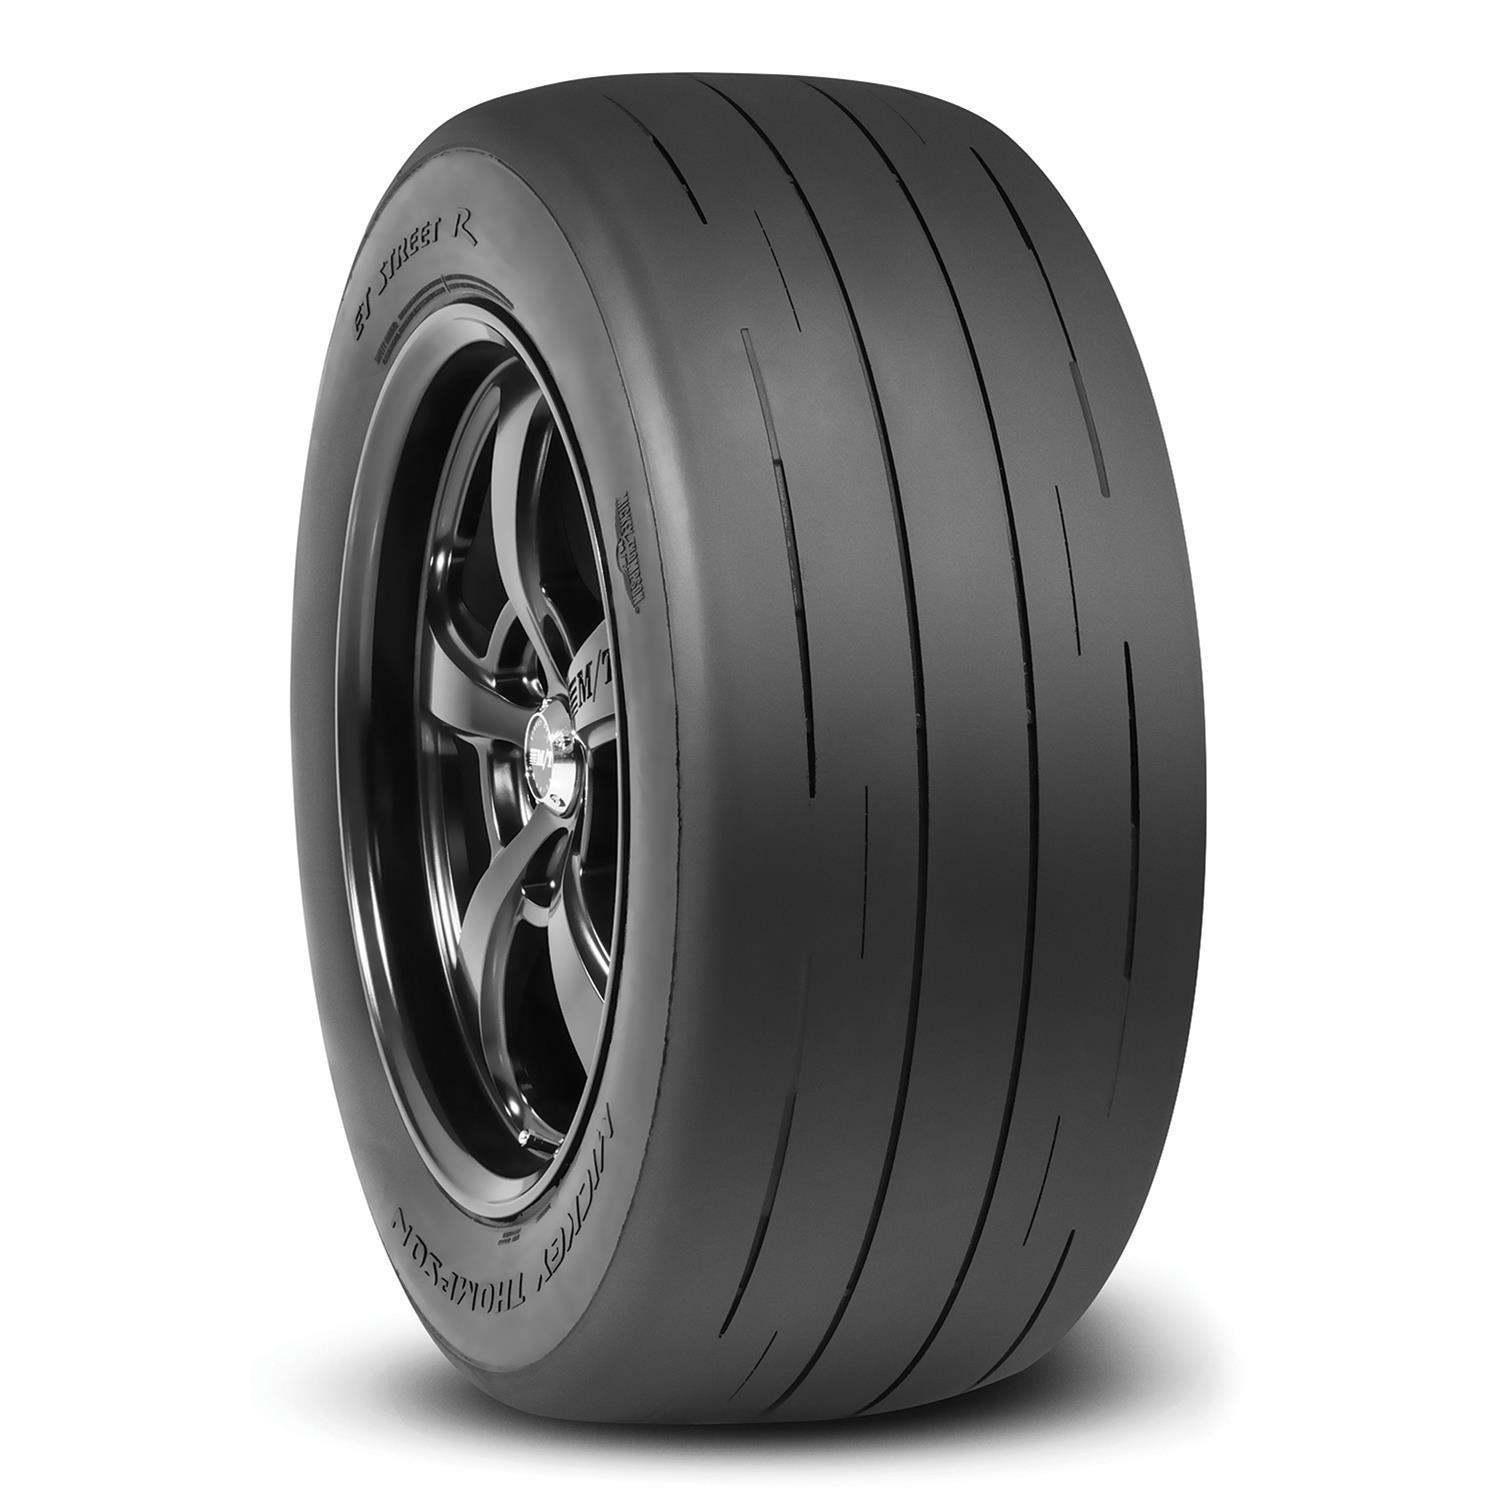 P325/50R15 ET Street R Tire - Burlile Performance Products